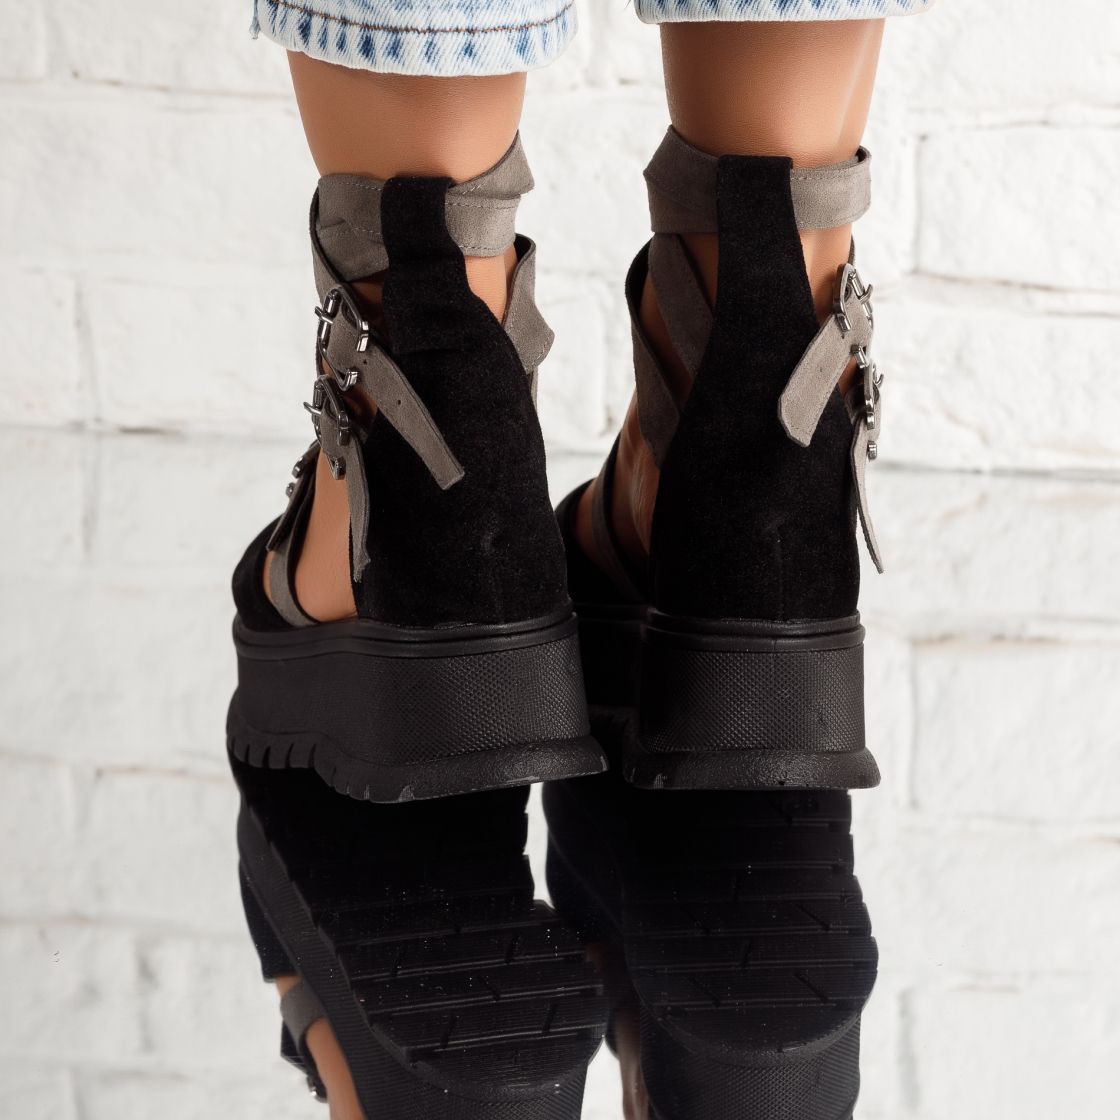 Alkalmi cipő fekete/szürke Luna #5076M